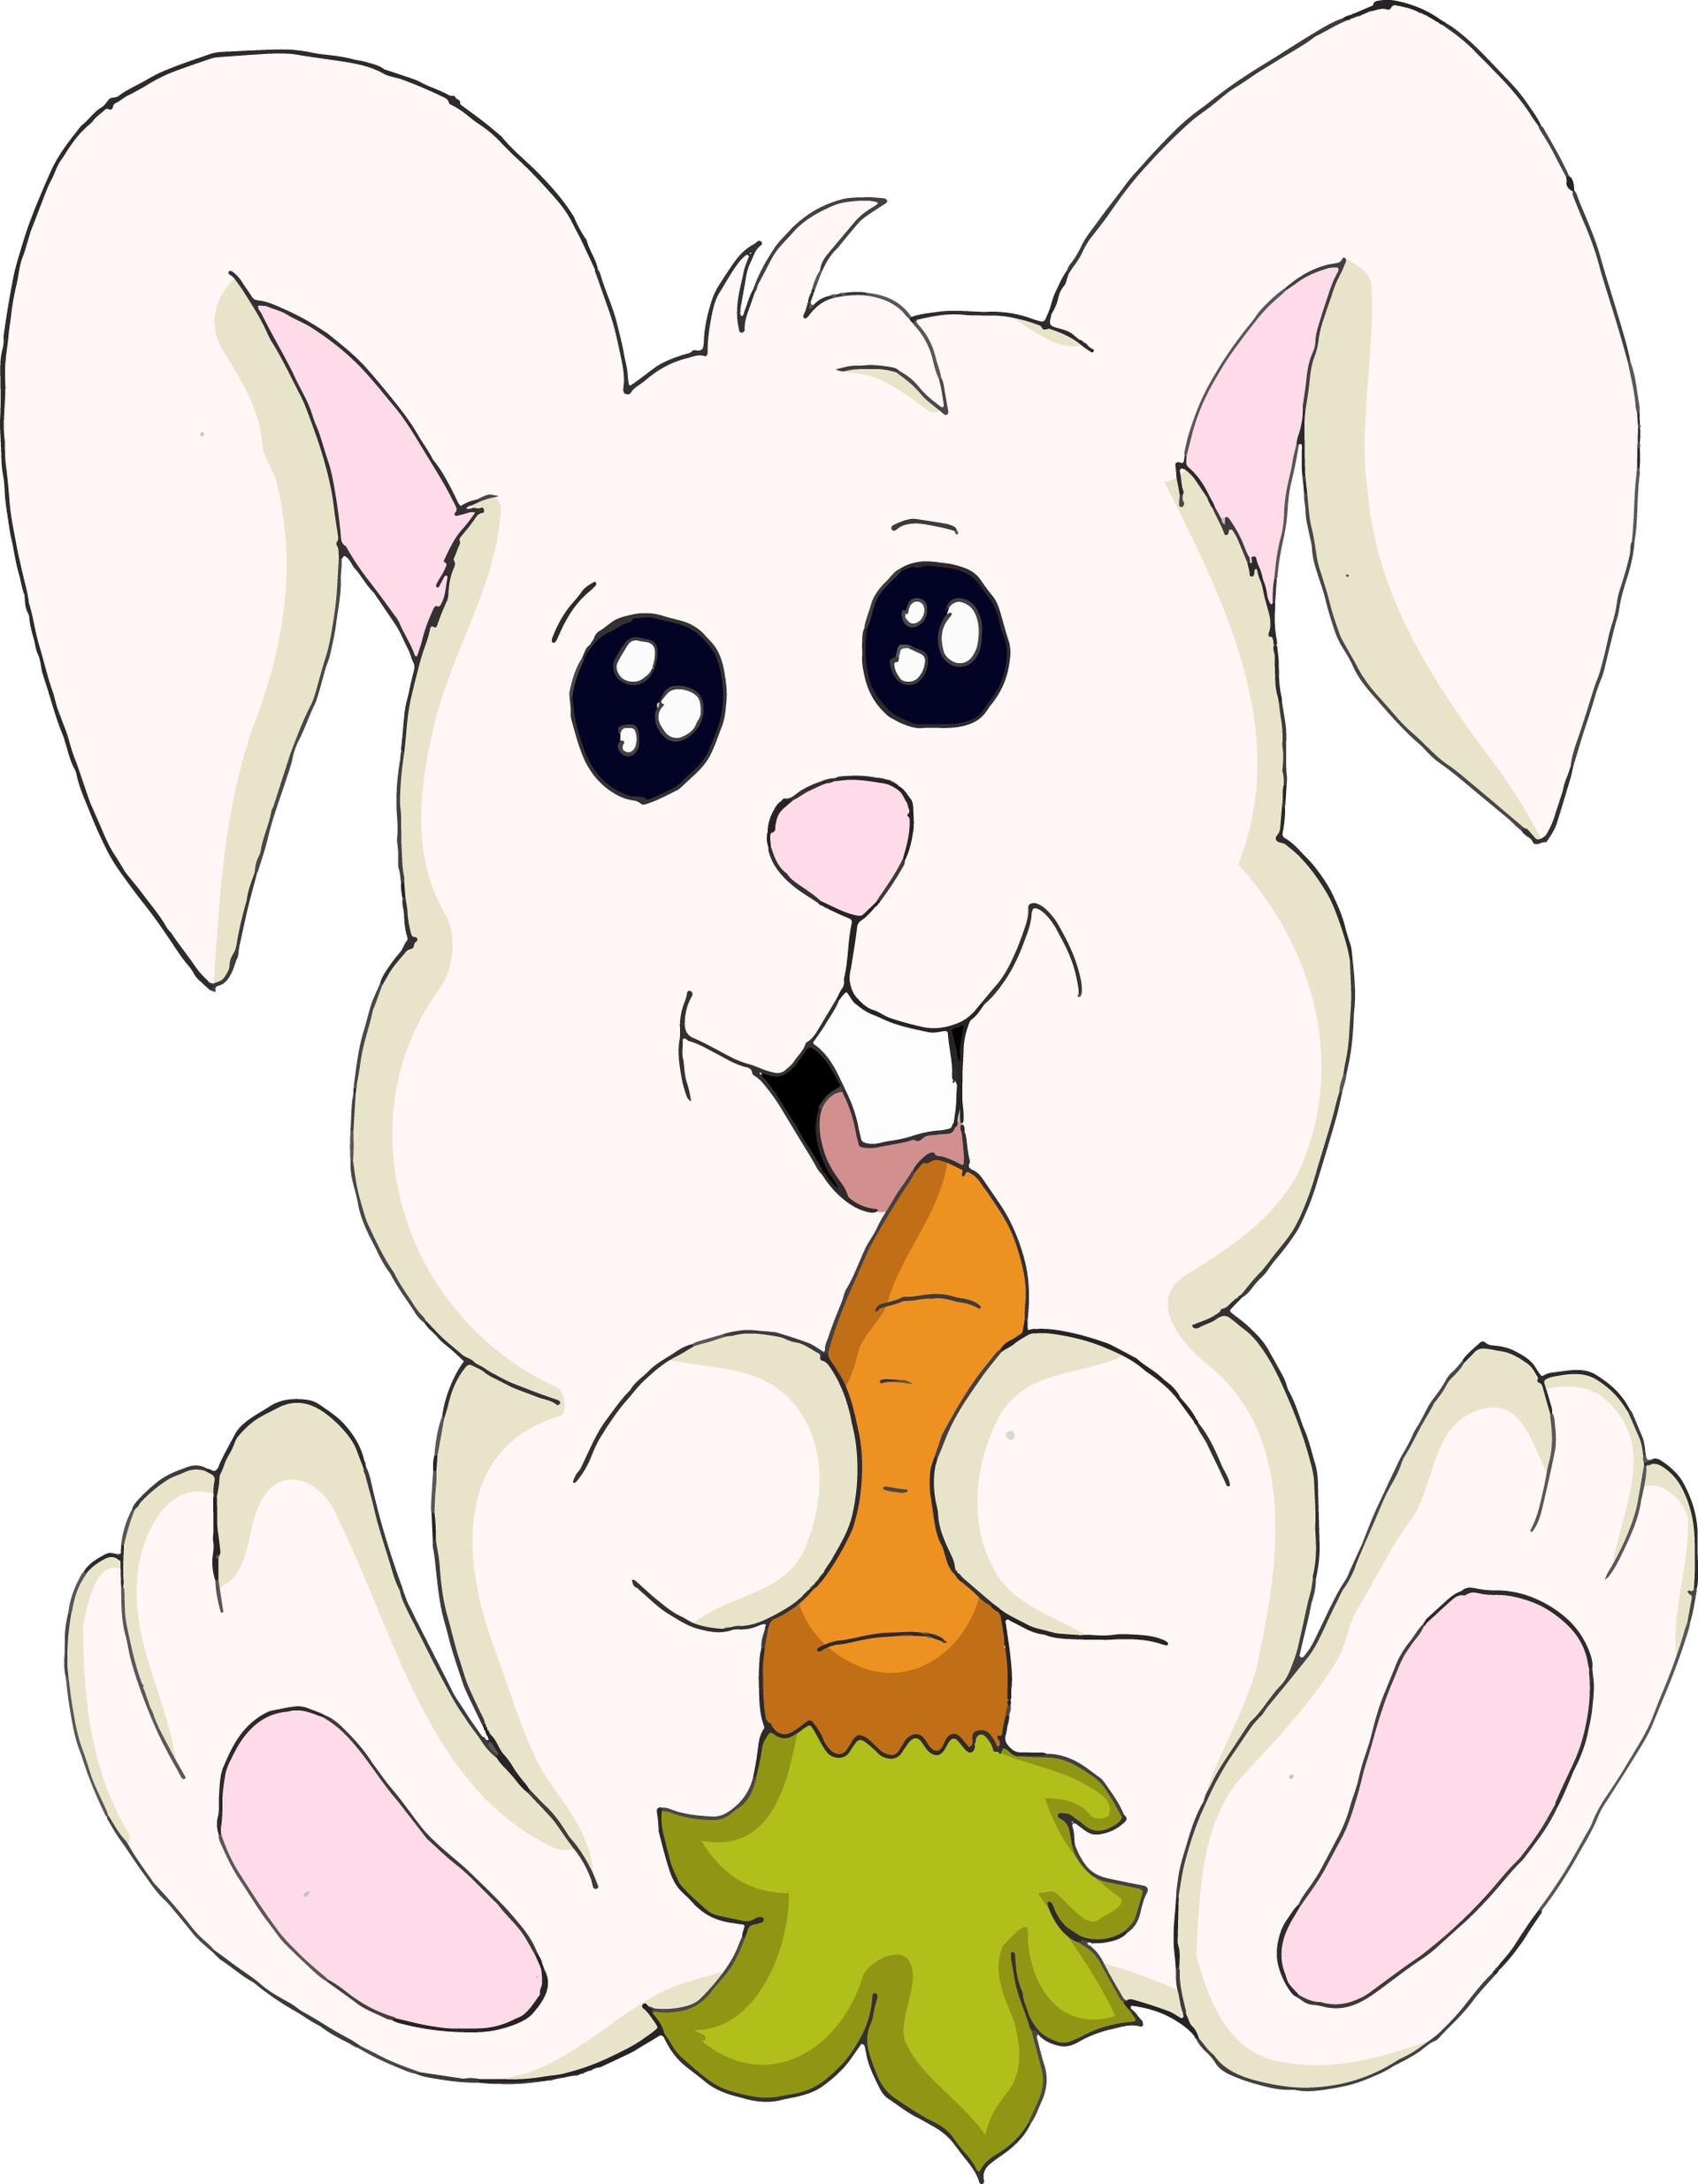 ArtStation - Cute Bunny Eating A Carrot